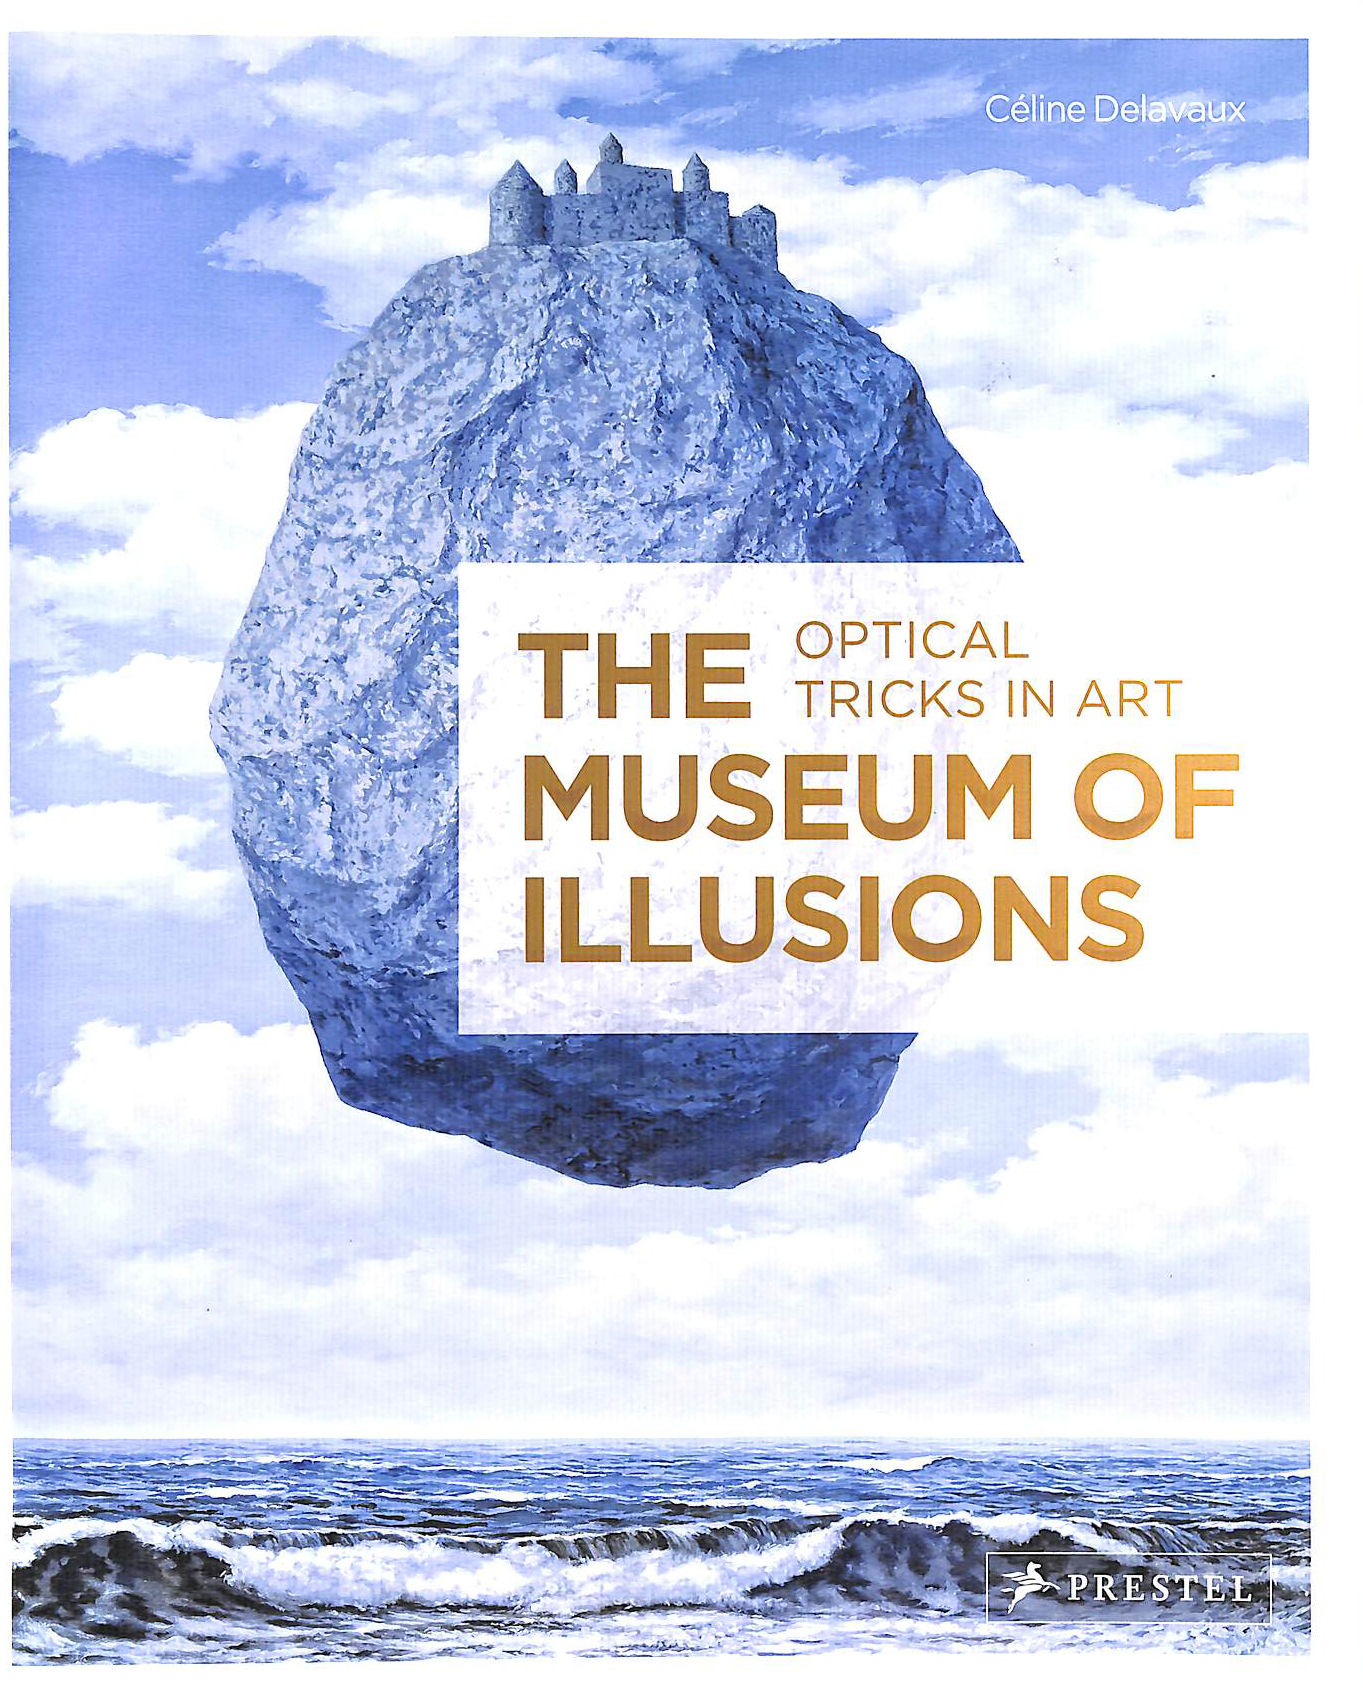 CELINE DELAVAUX - The Museum of Illusions: Optical Tricks in Art